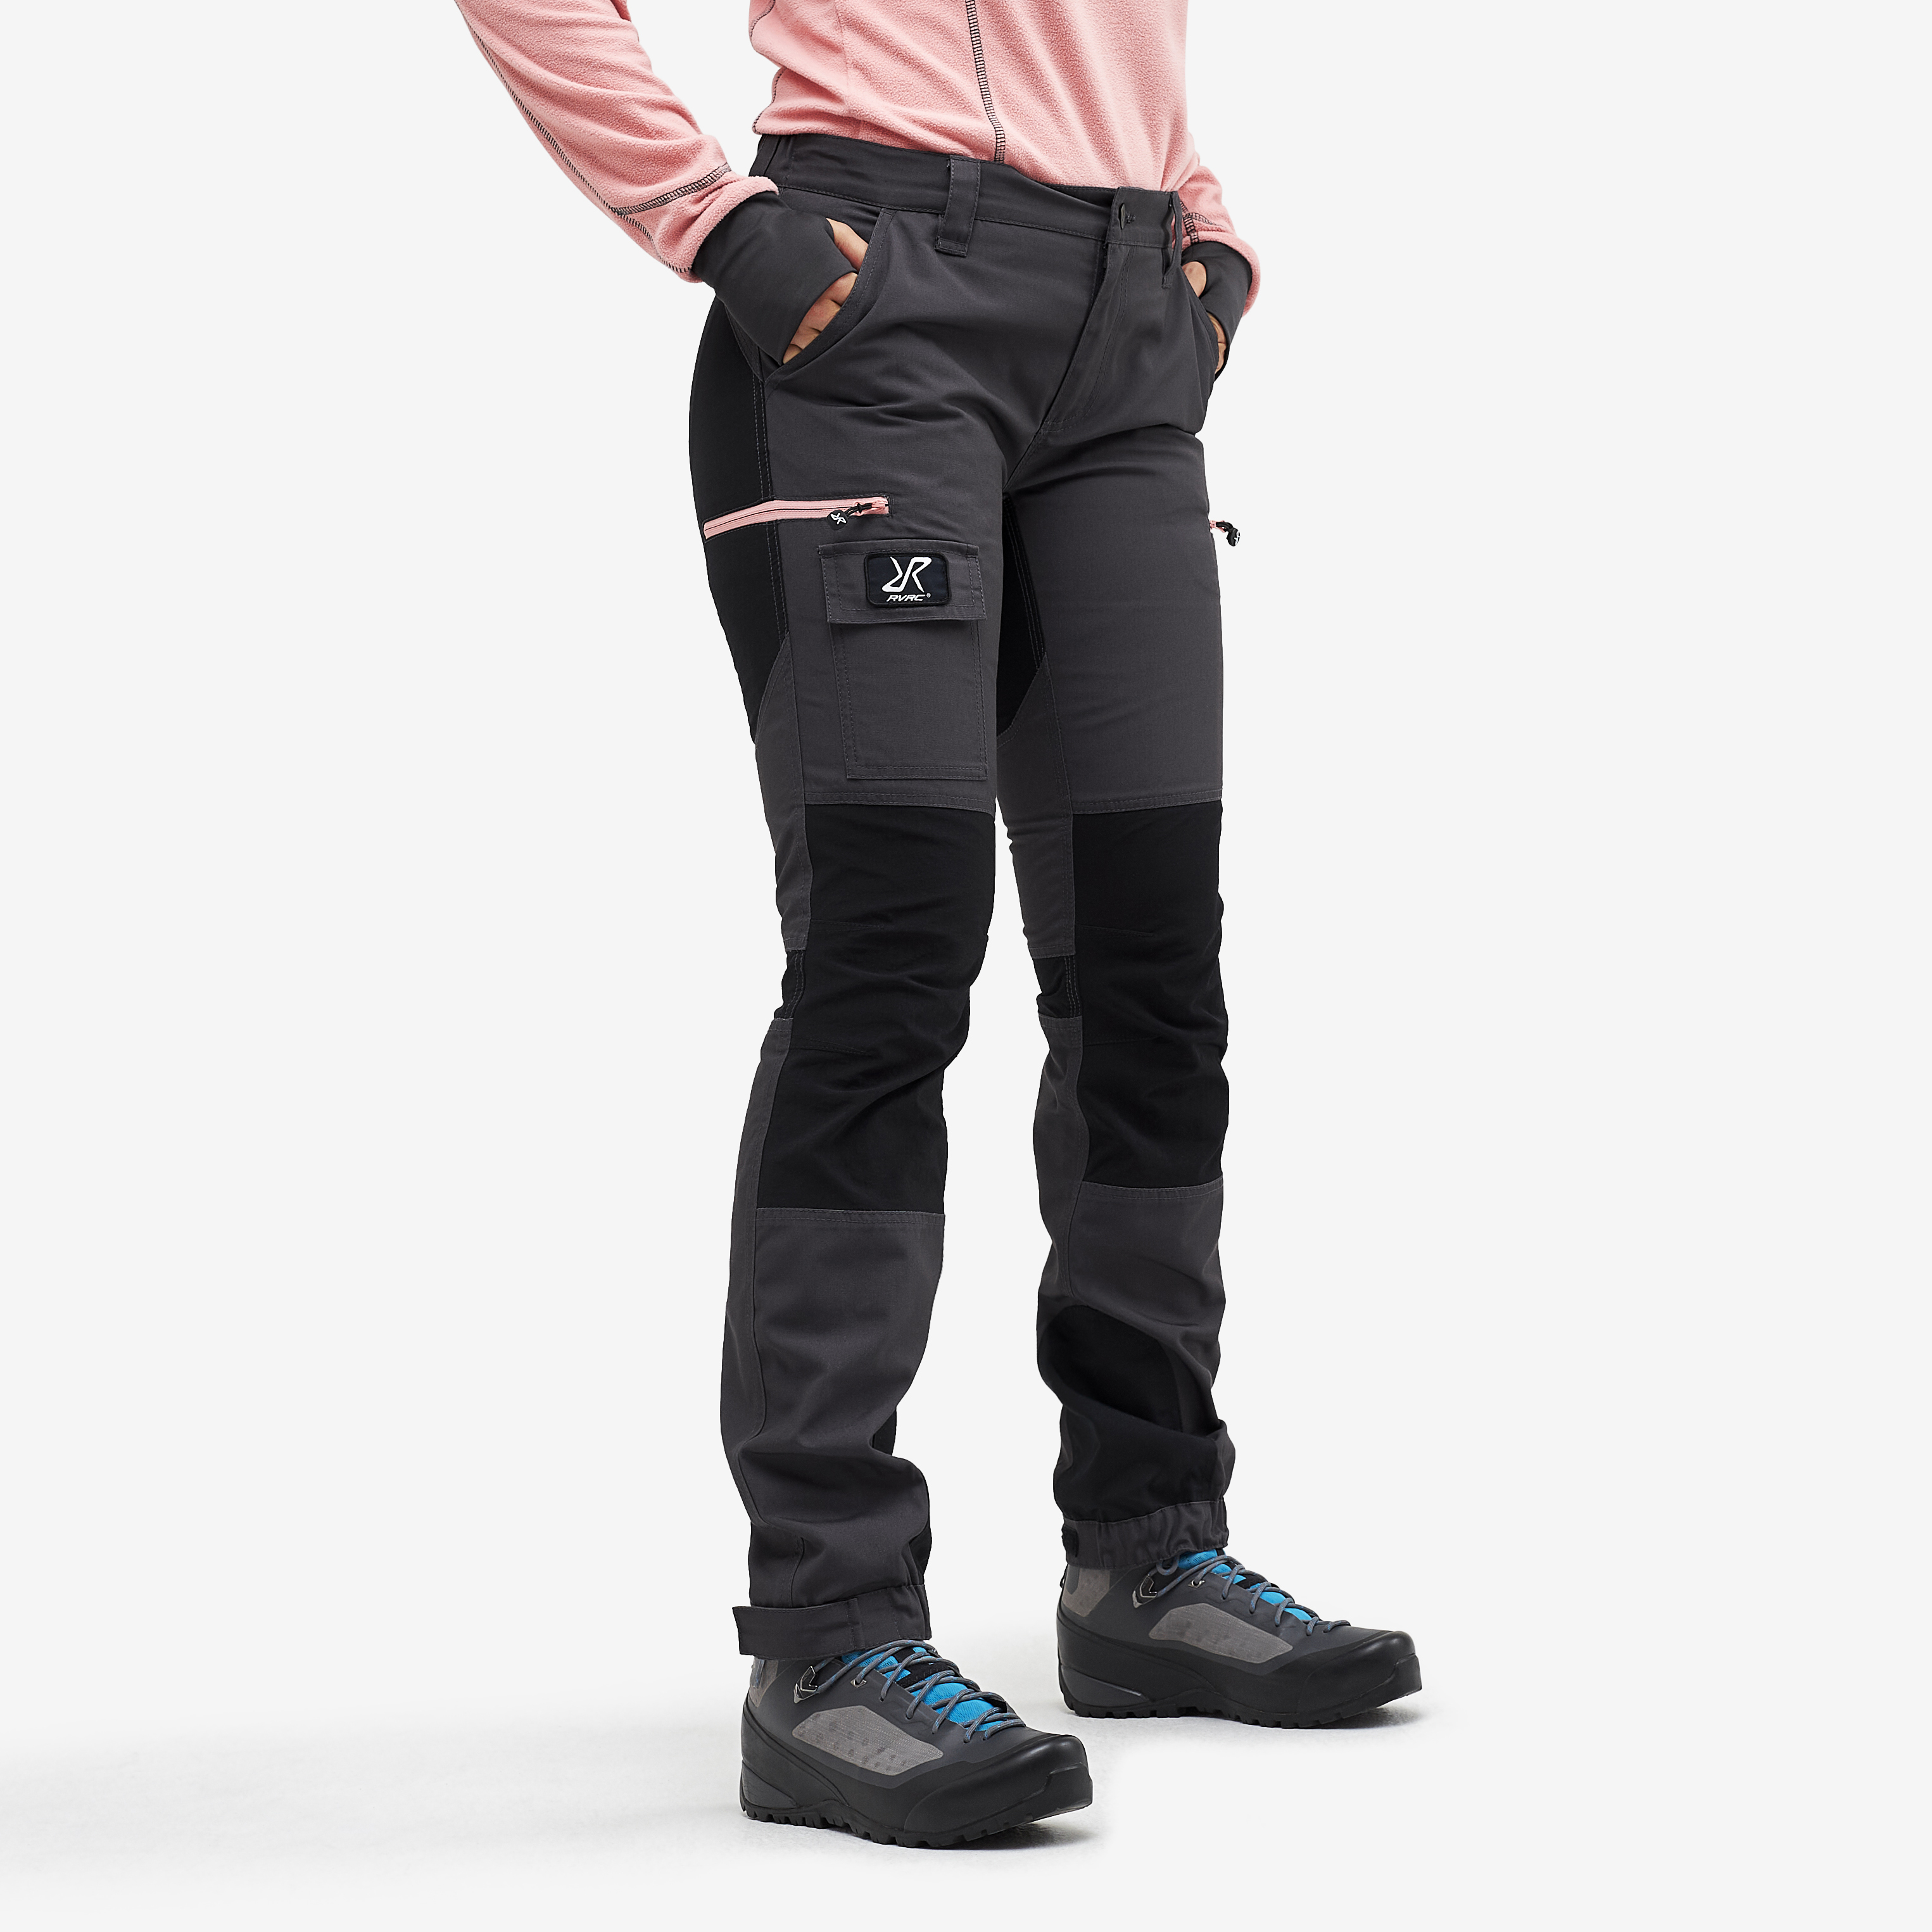 Nordwand outdoor pants for women in dark grey